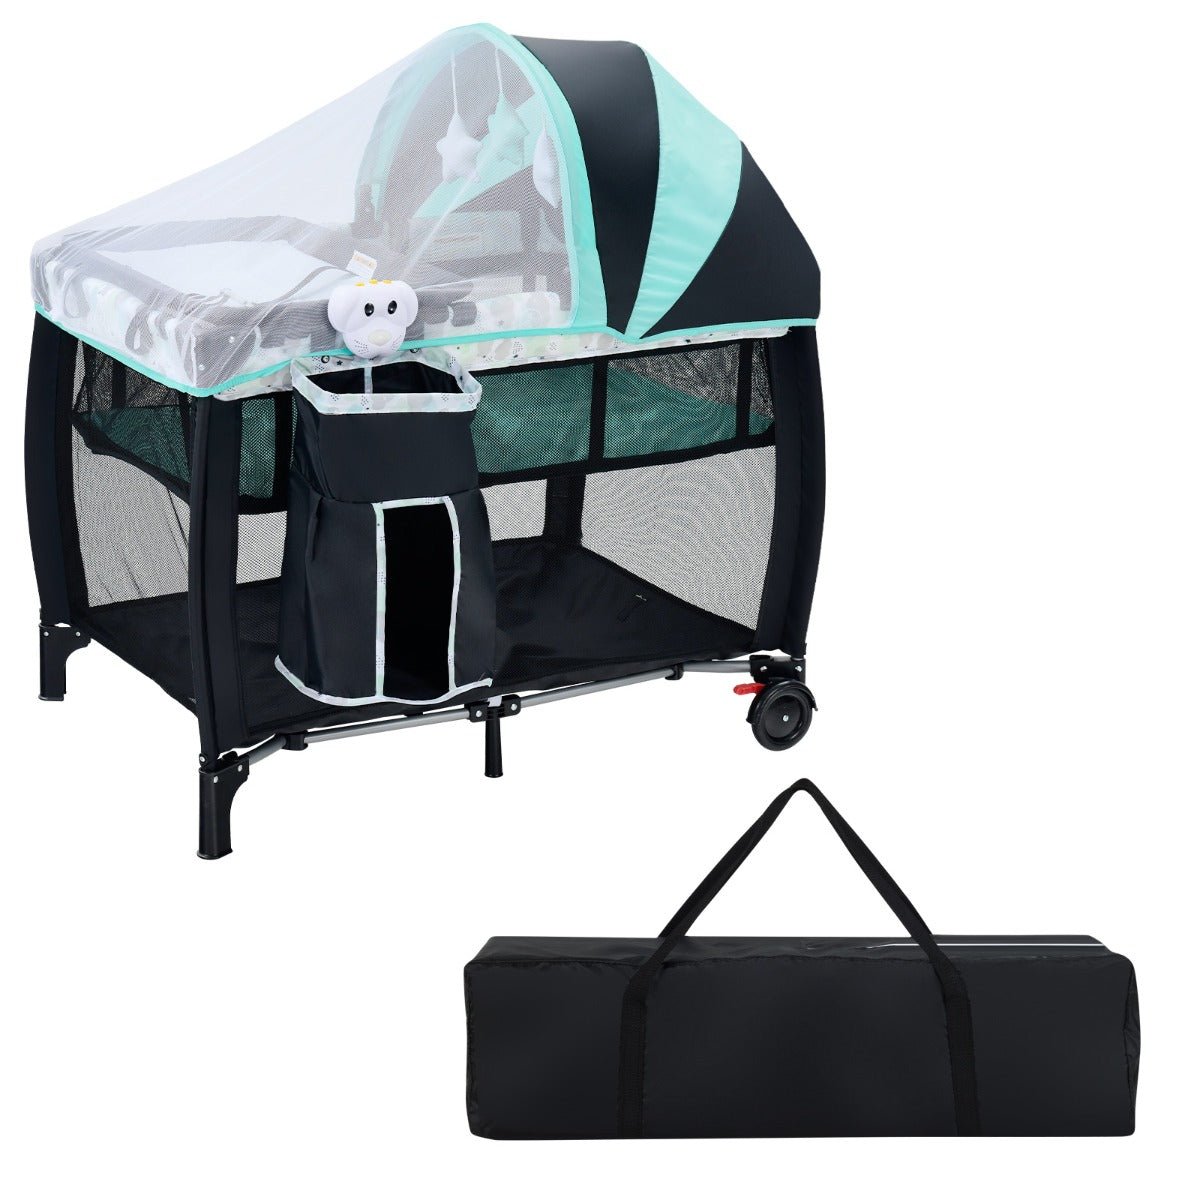 Versatile 3-in-1 Baby Portacot - Detachable & Adjustable Net for Peaceful Rest